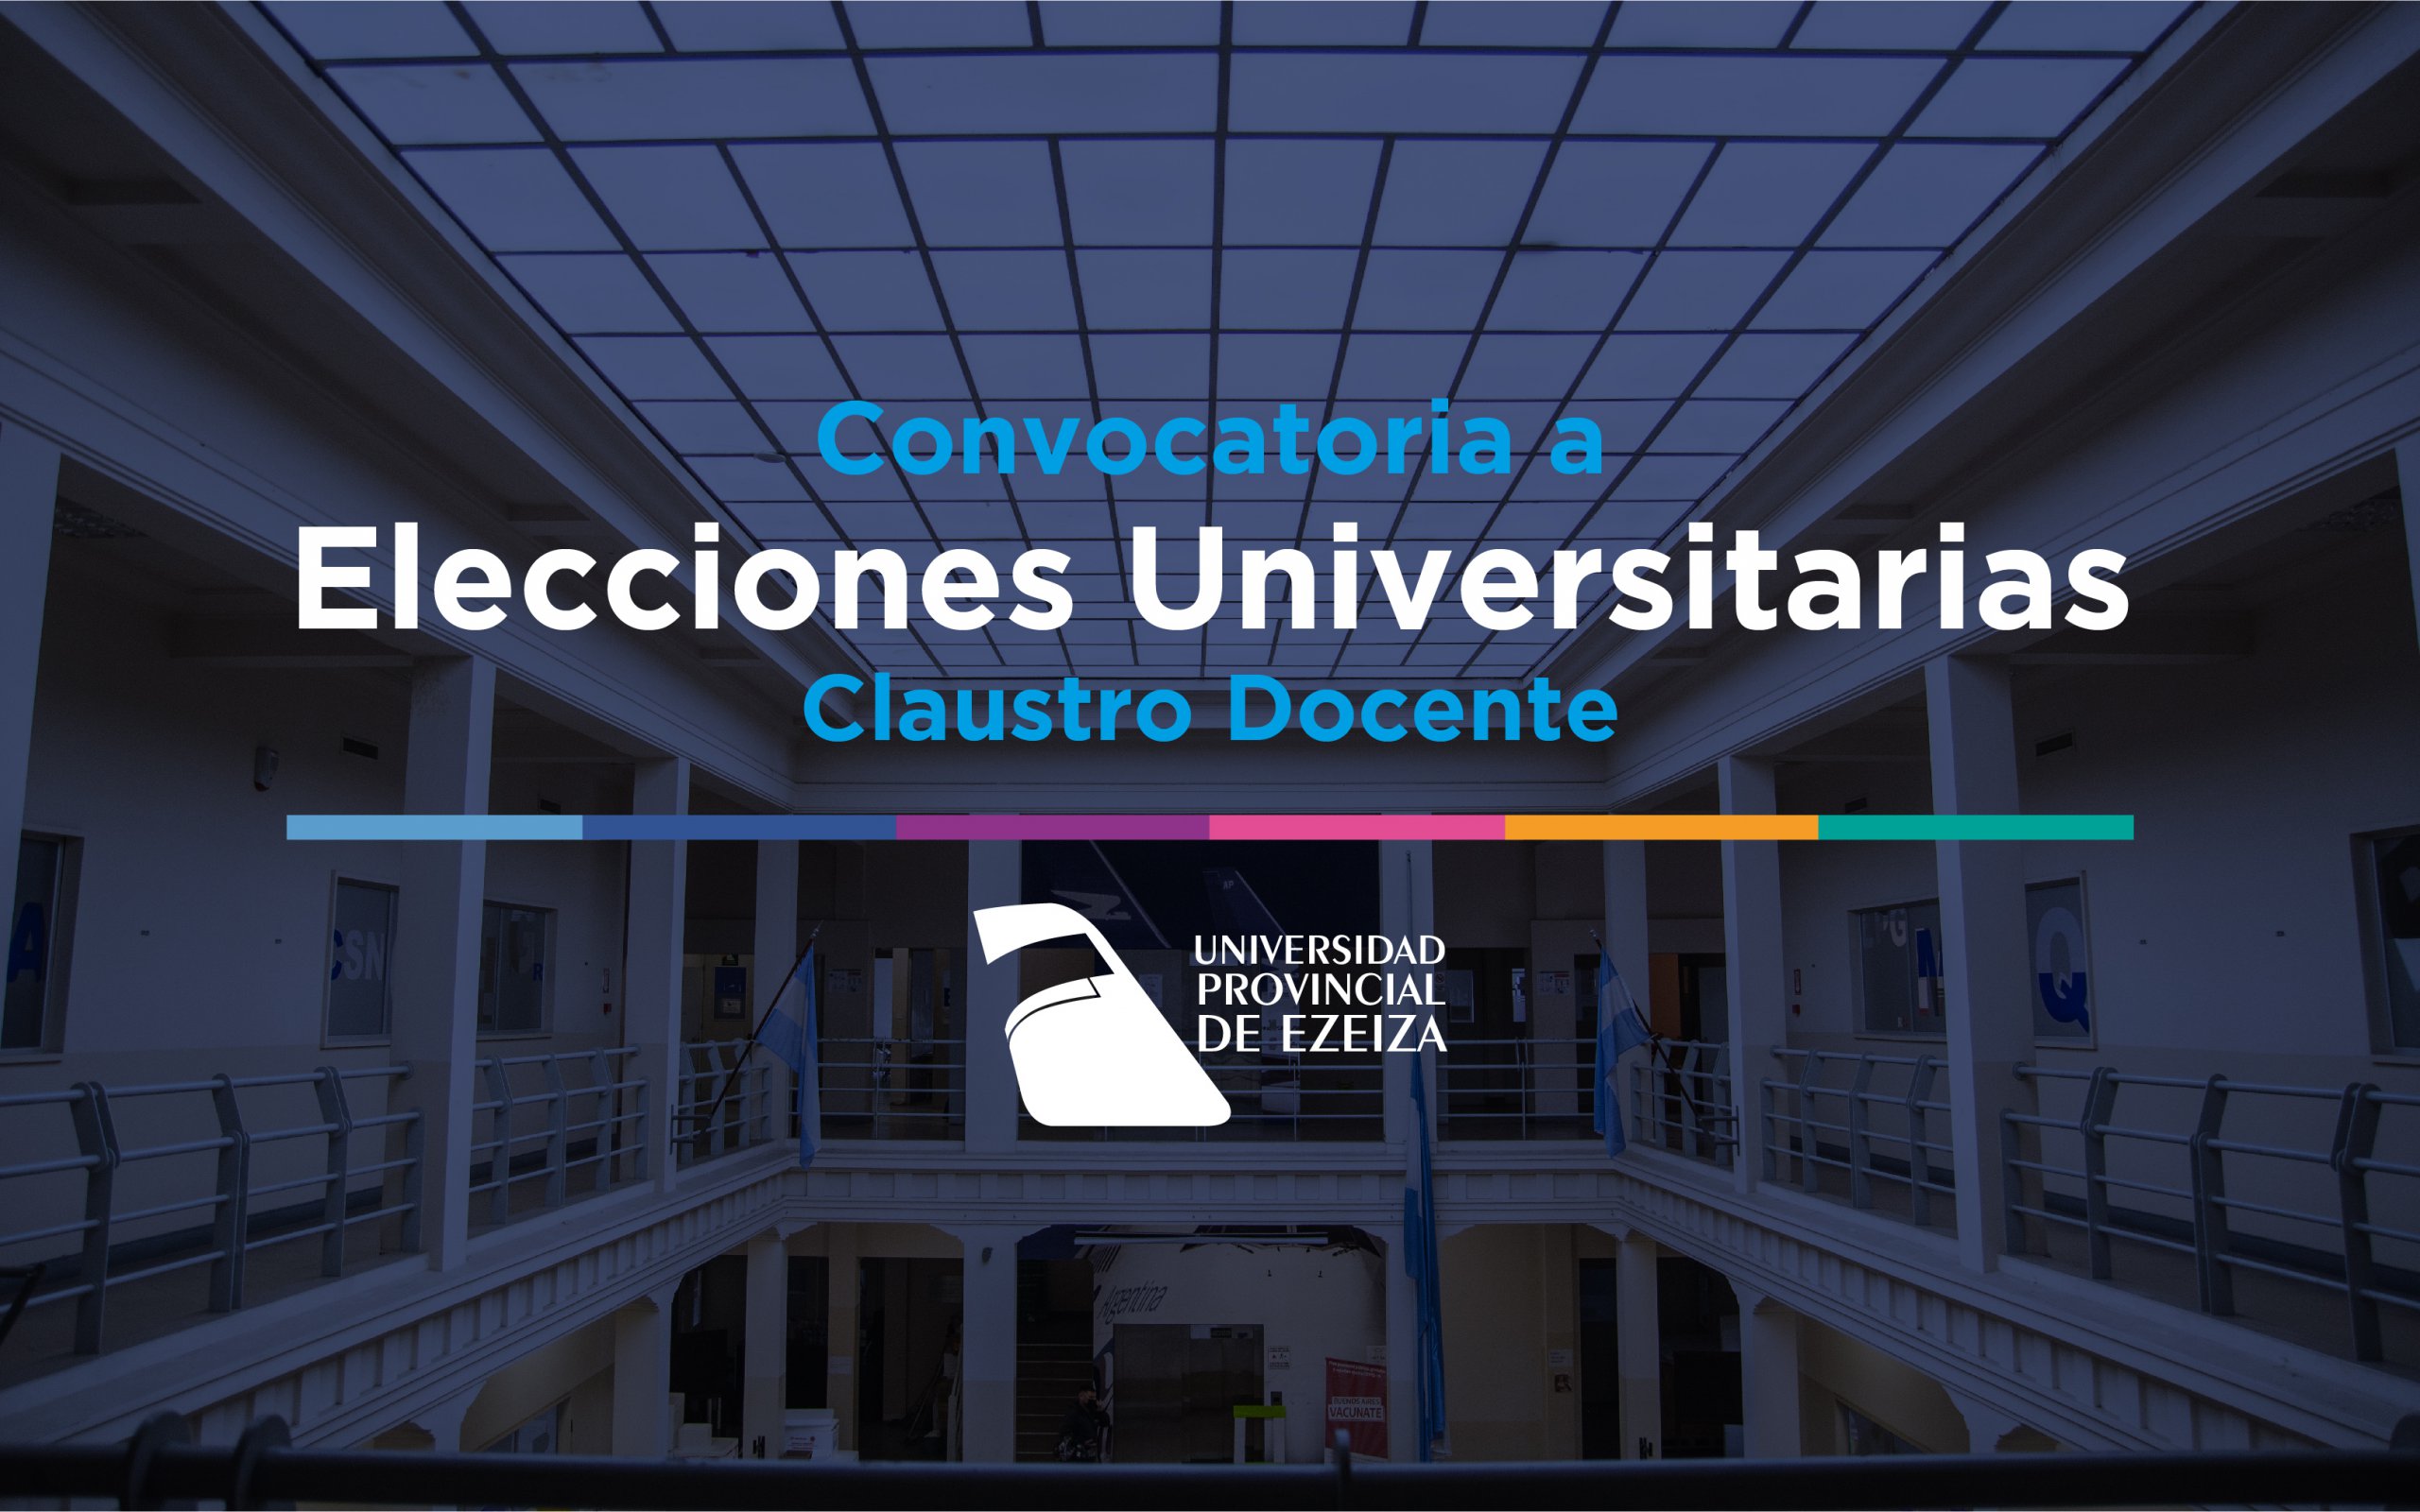 Convocatoria a Elecciones Universitarias – Claustro Docente